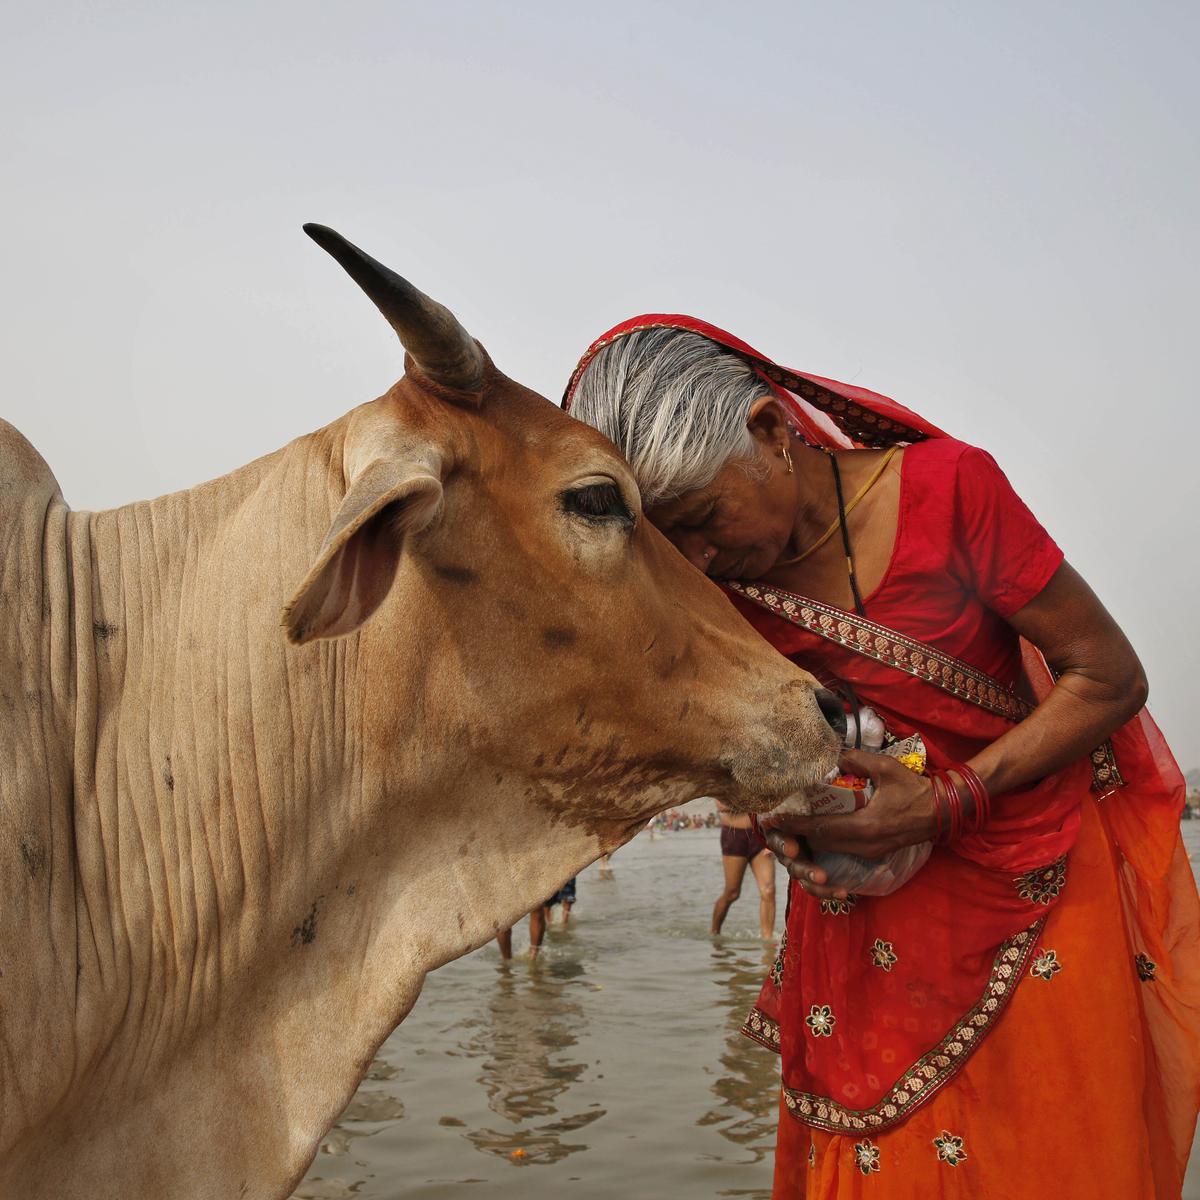 Animal Welfare Board withdraws circular on 'Cow Hug Day' - The Hindu